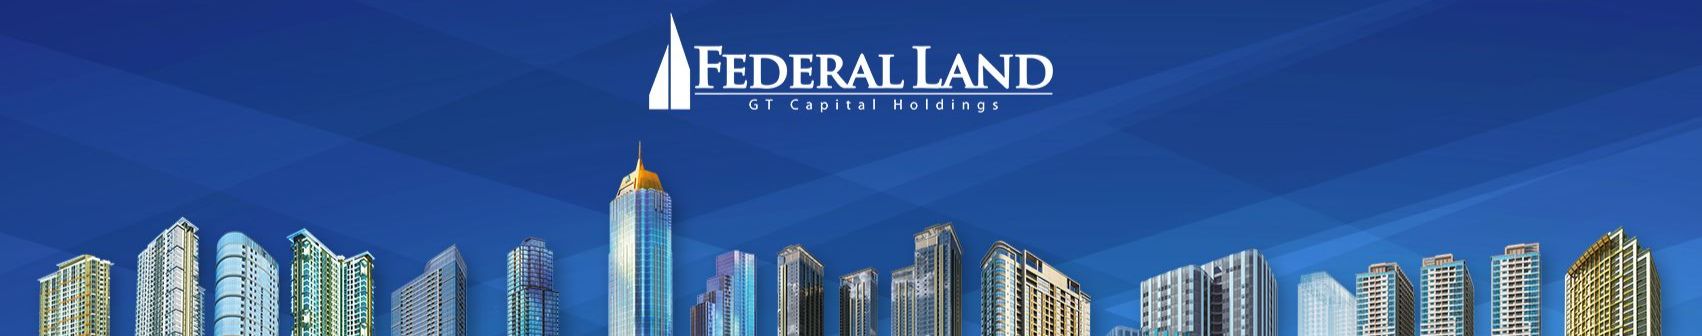 Federal Land Inc. banner